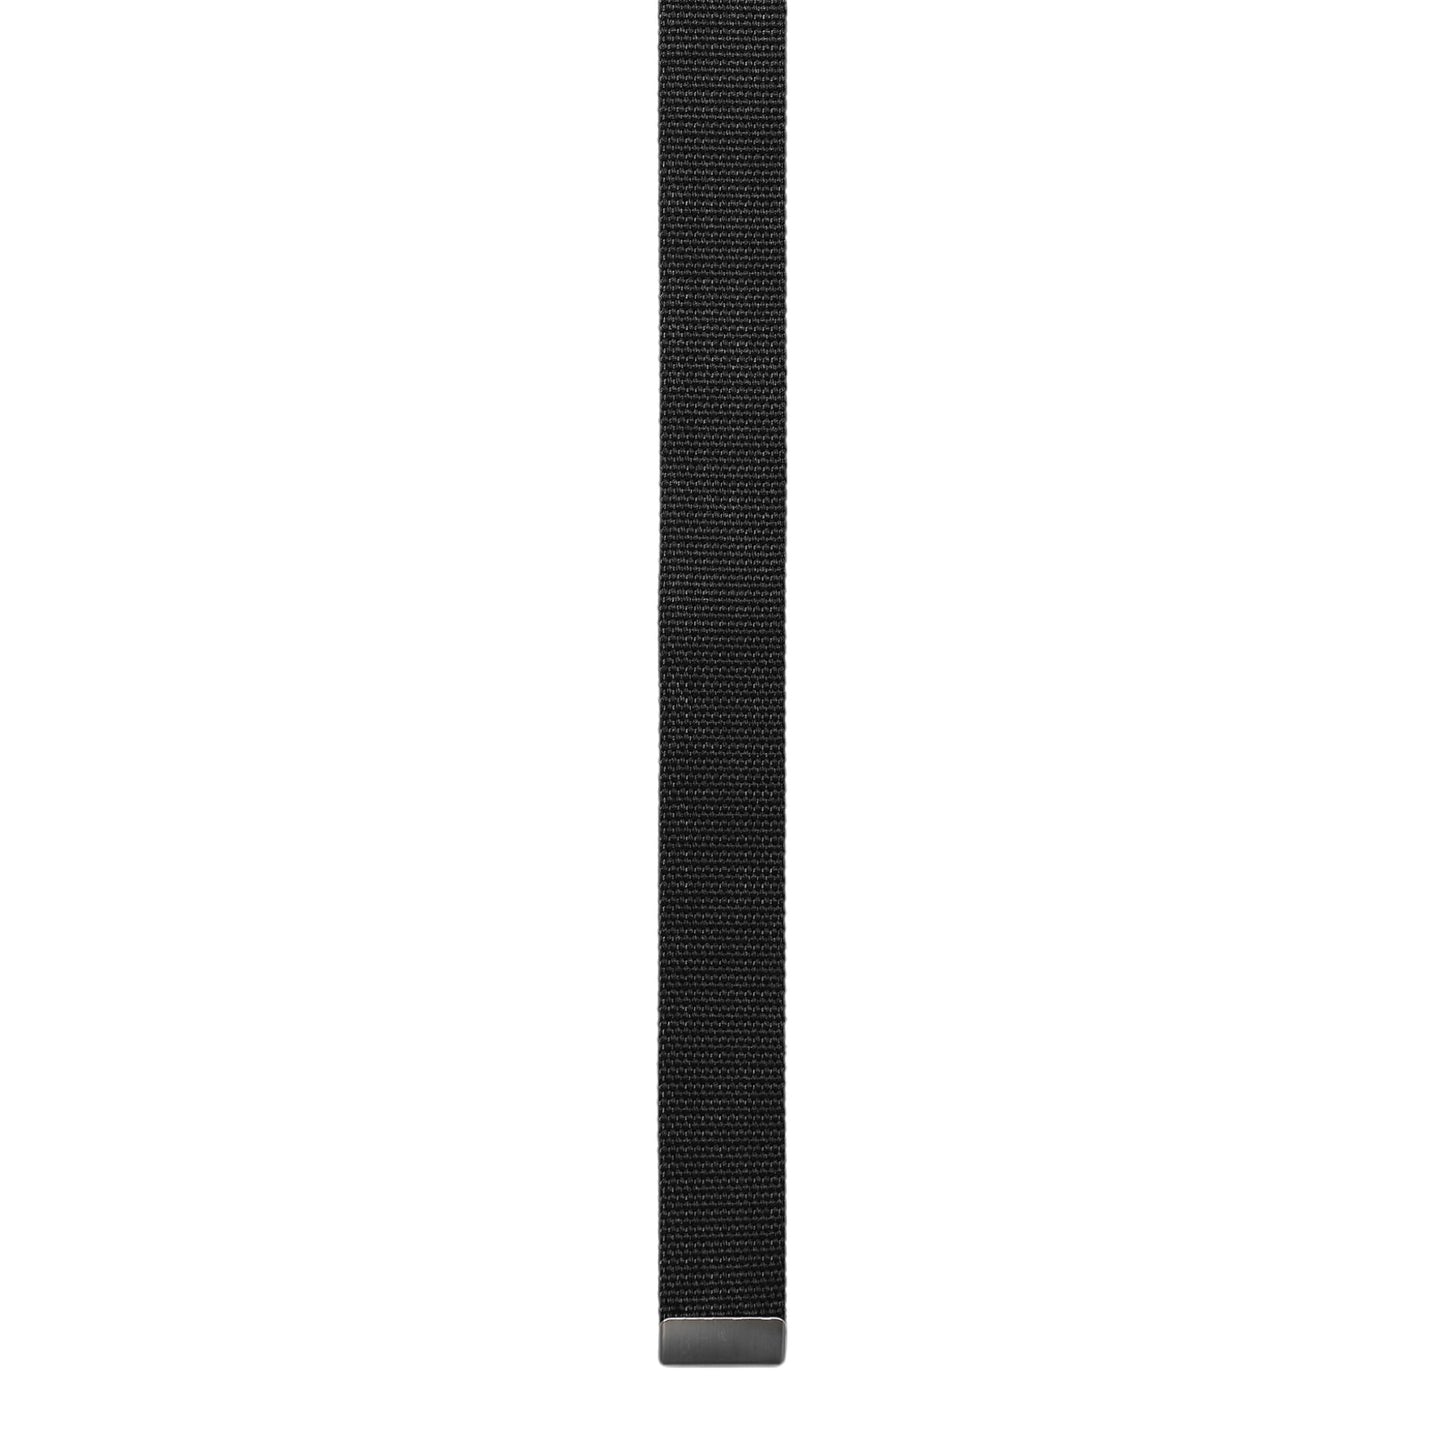 Carhartt Wip Clip Belt Chrome - Black